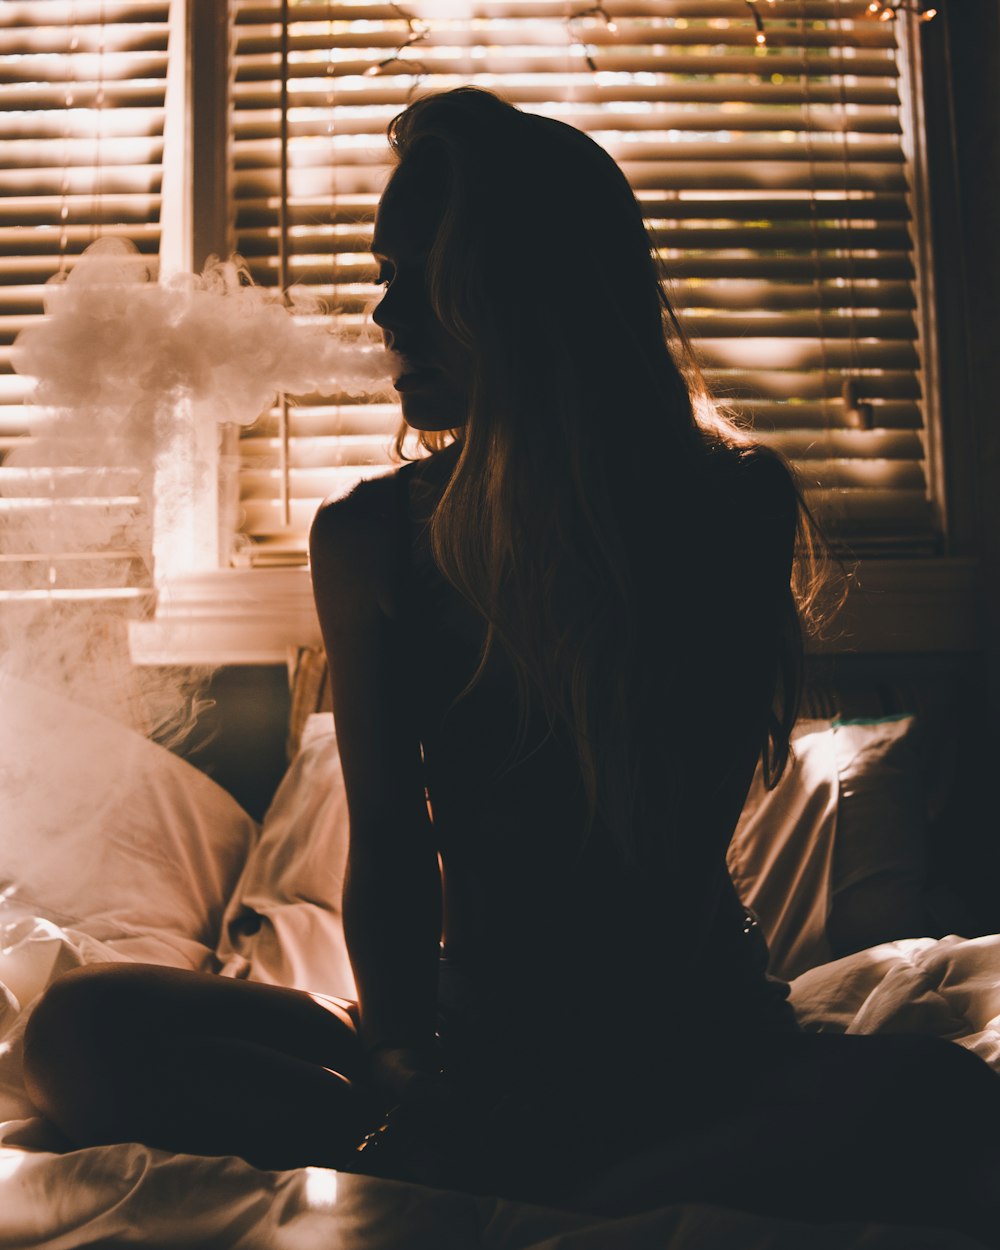 Woman sitting on bed photo – Free Cigarette Image on Unsplash